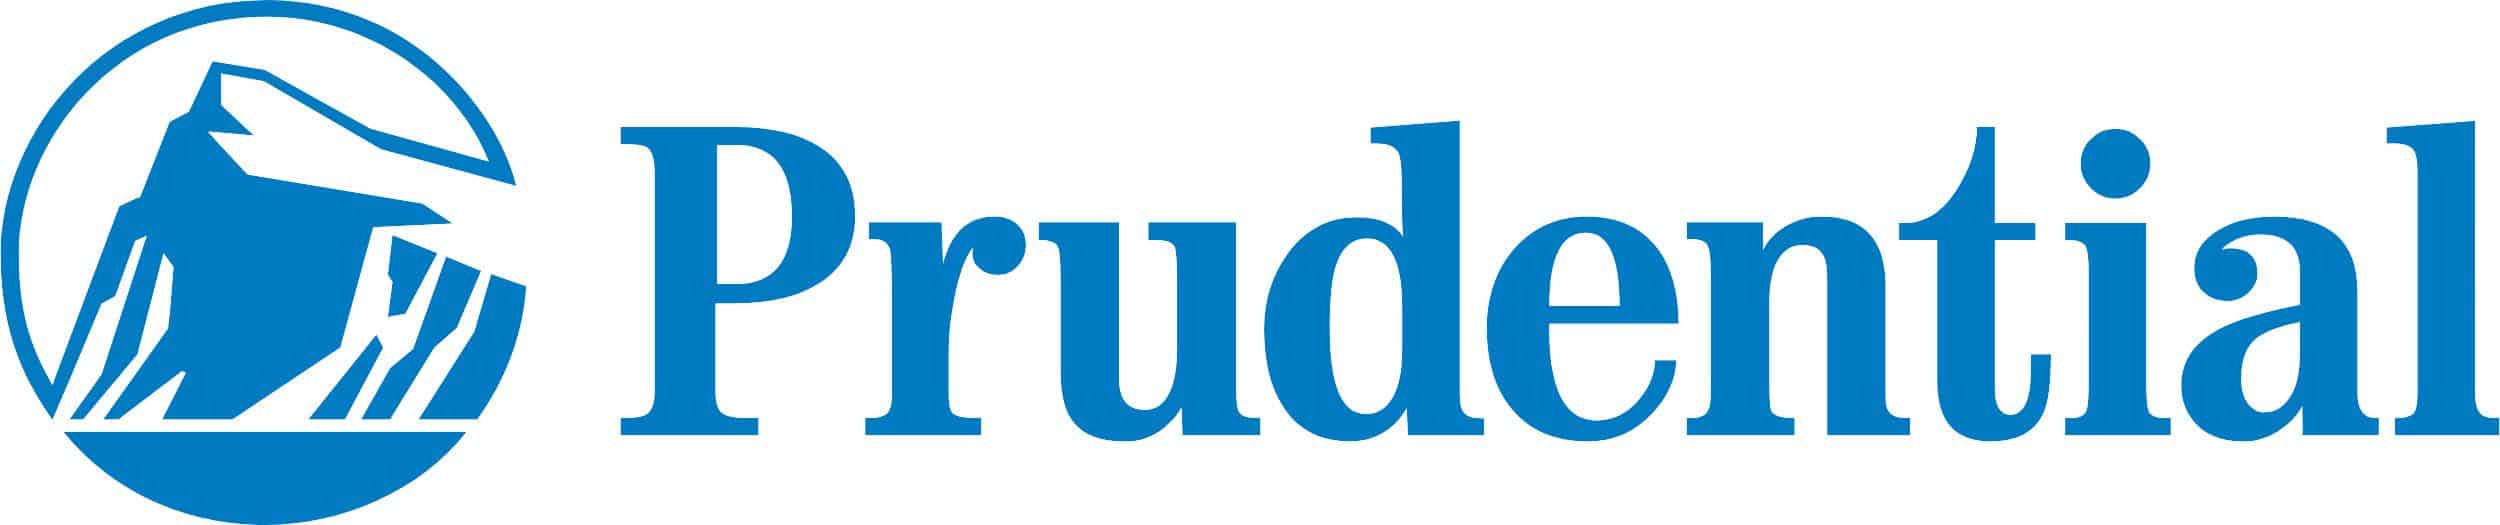 Prudential logo 